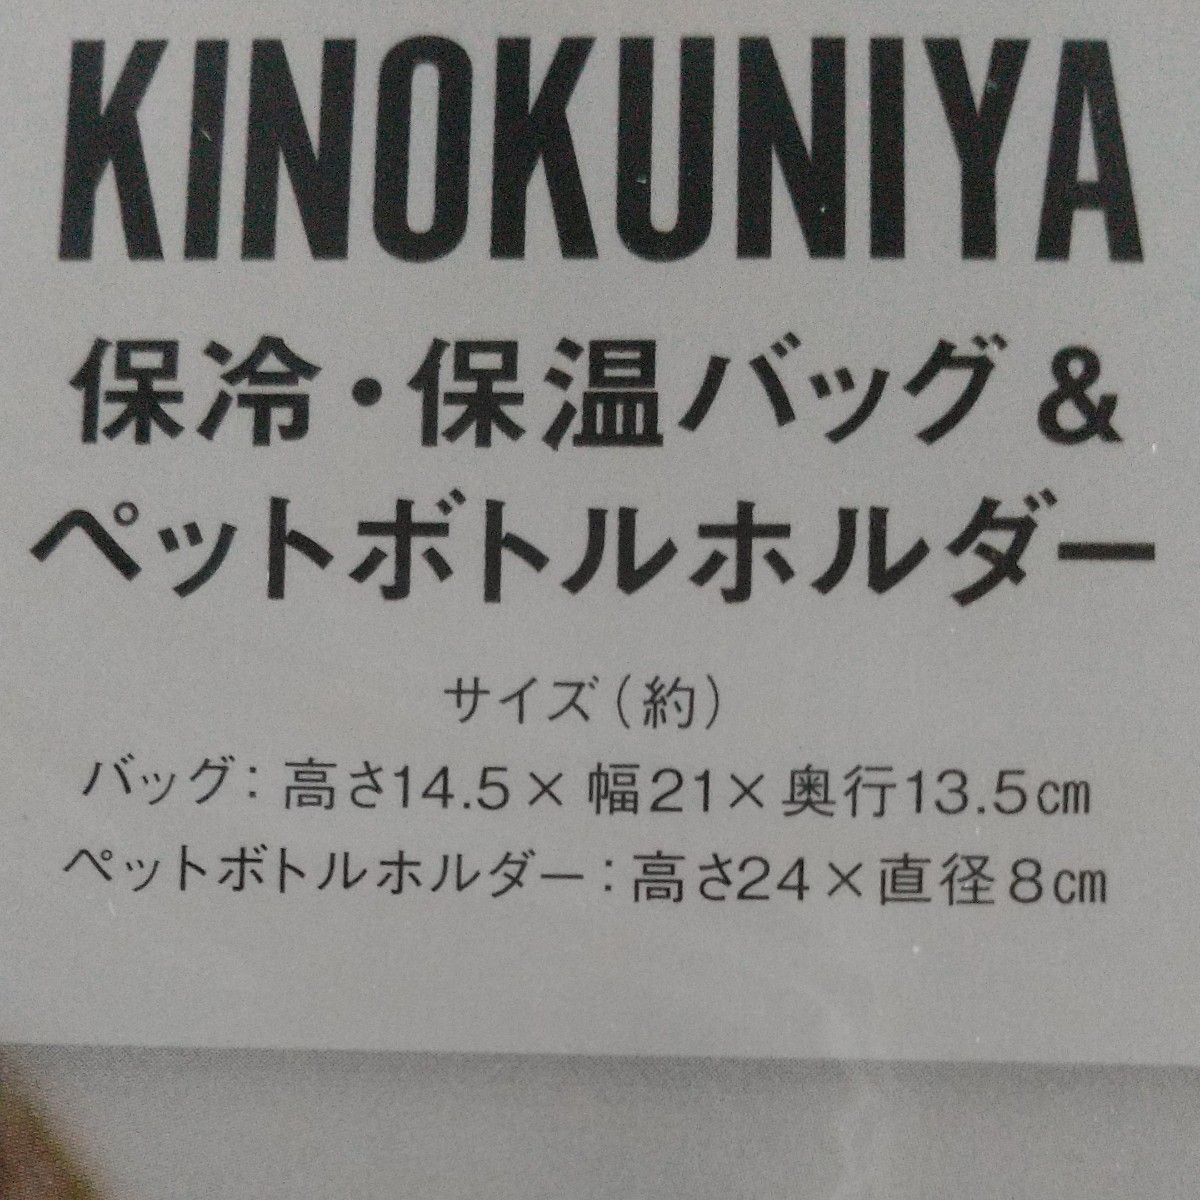 KINOKUNIYA保冷・保温バッグ&ペットボトルホルダー、雑誌